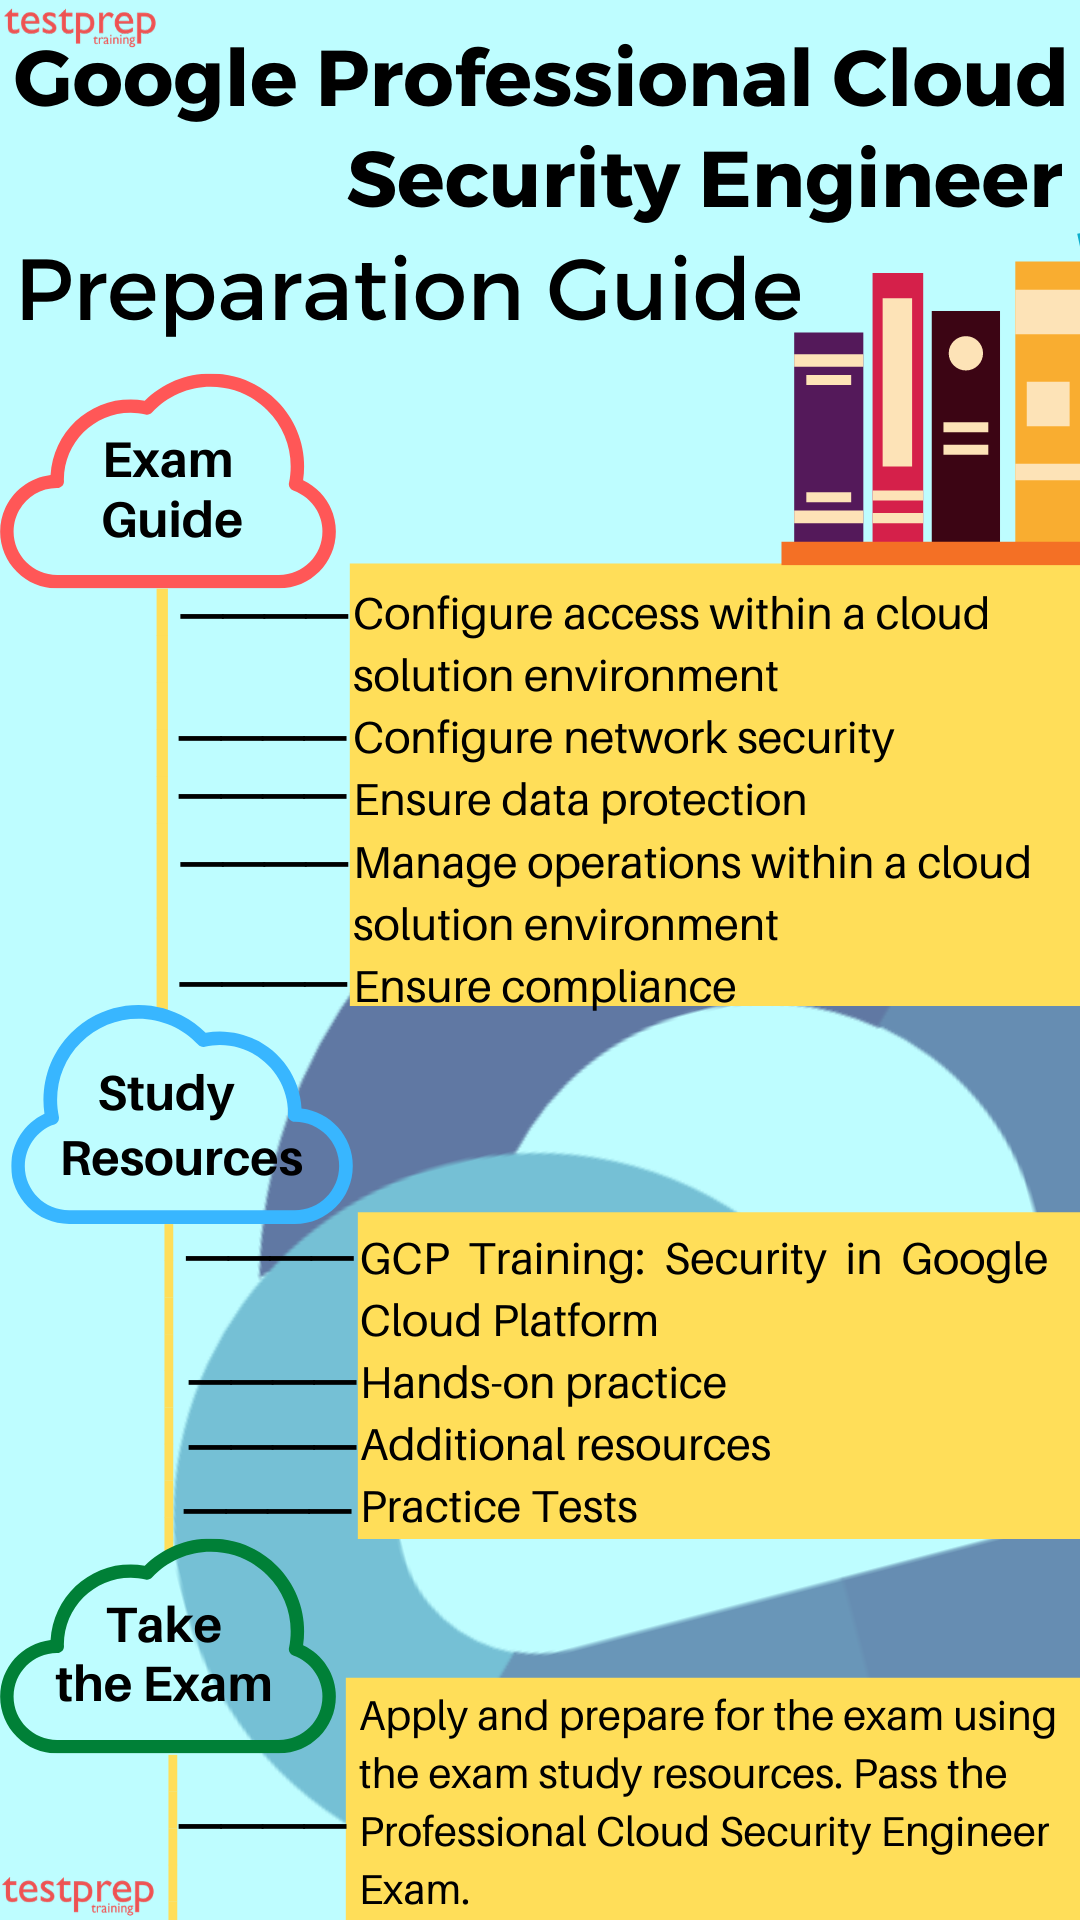 Google Professional Cloud Security Engineer Exam guide